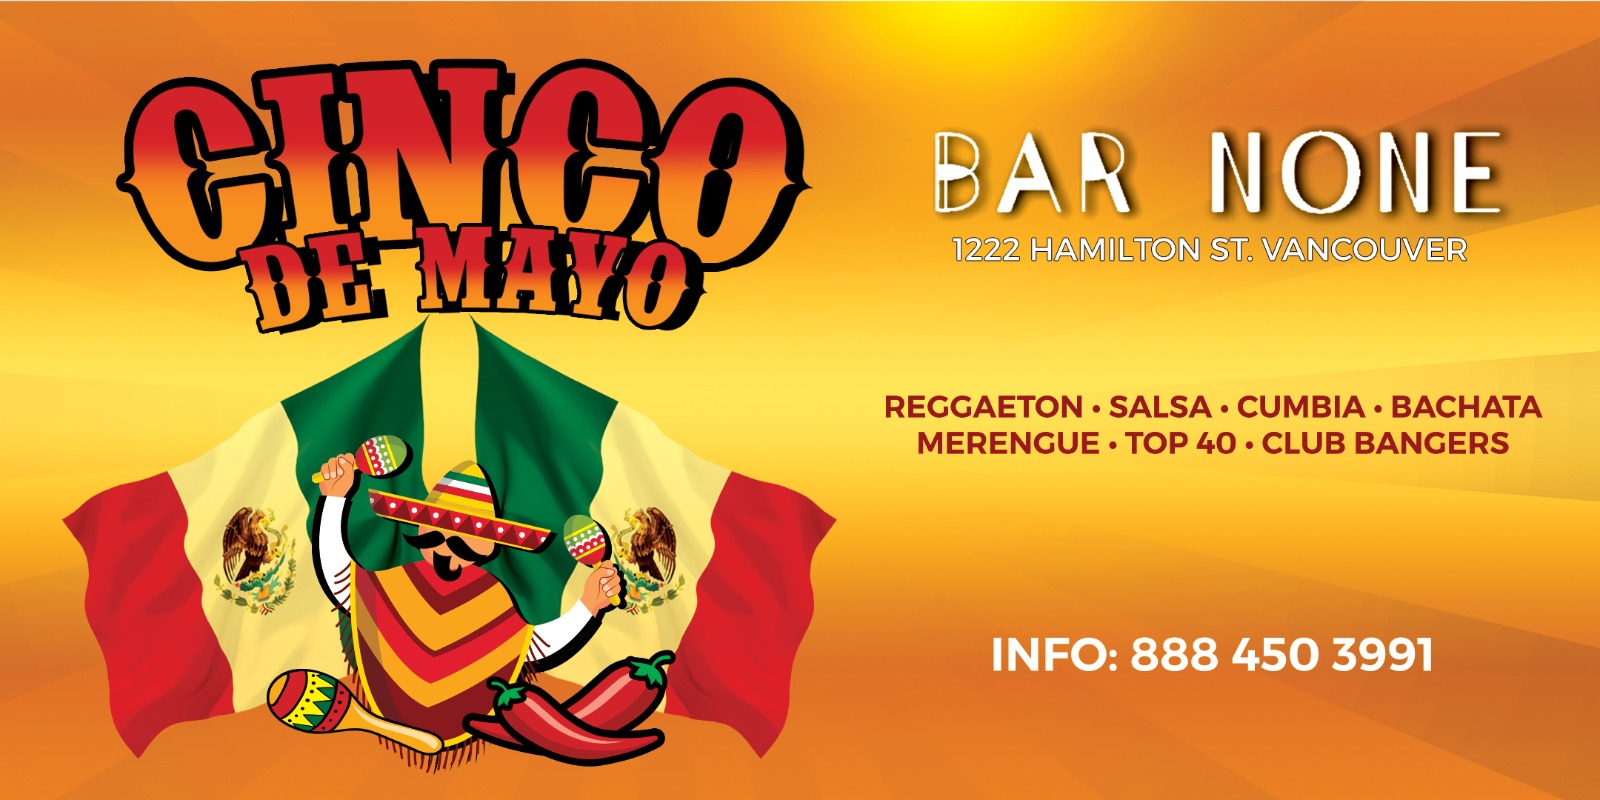 Cinco De Mayo Fiesta Party 2022 at Bar None | Vancouver Latin Events